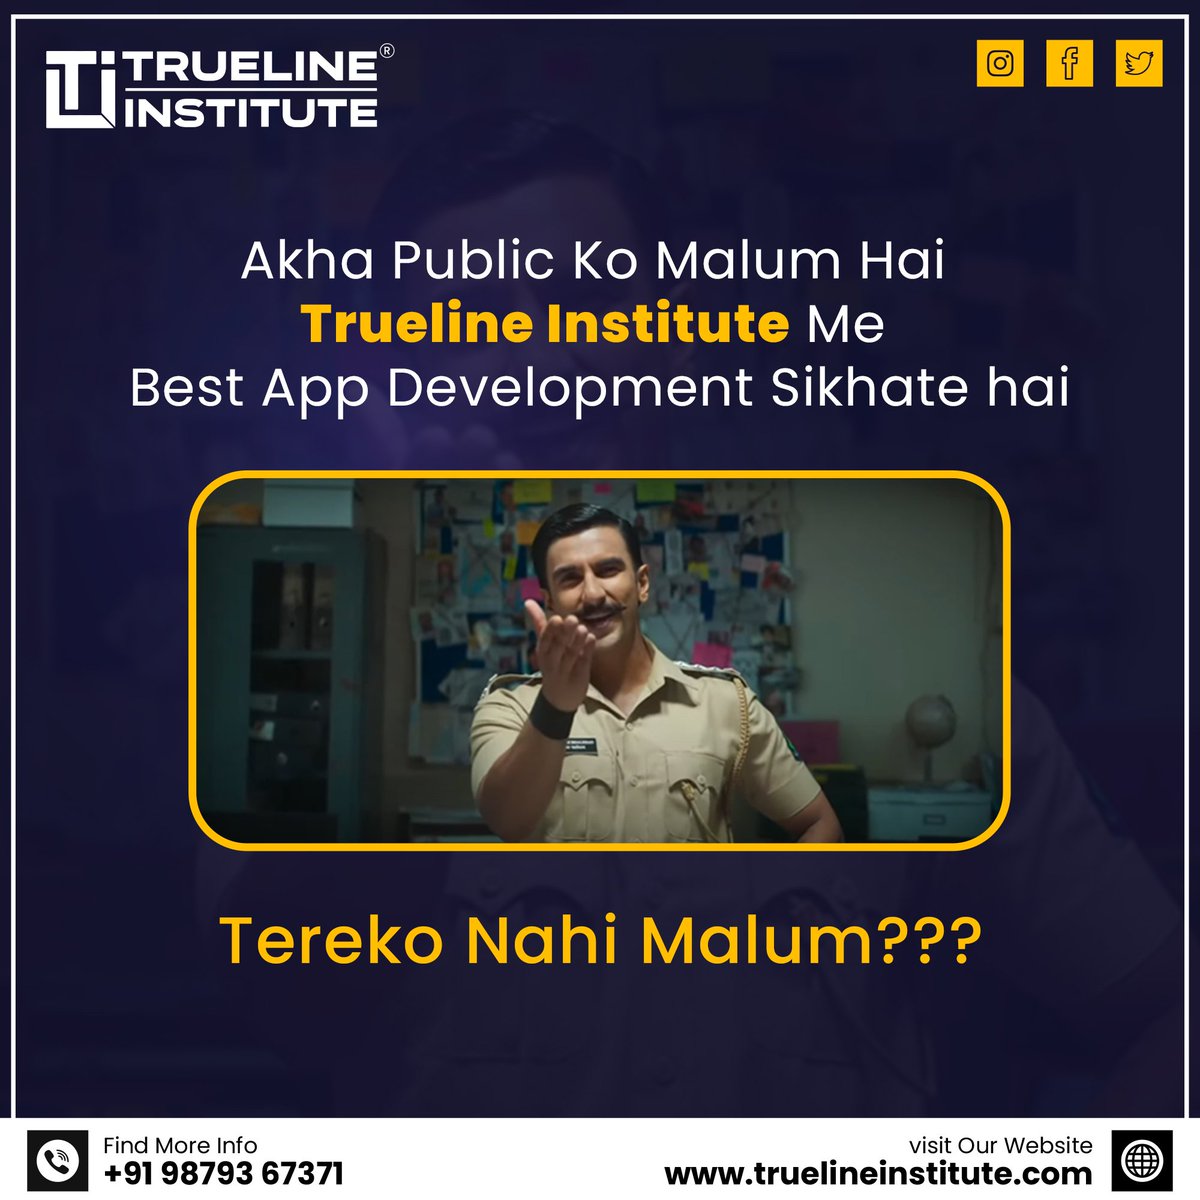 📢 Akha Public ko Malum hai Trueline Institute me best App Development Sikhate hai. | Trueline Institute
➡️ Tereko nahi Malum?
☎️ +91 98793 67371
🌐 truelineinstitute.com
📧 vtruelineinstitute@gmail.com
🏠 427, Radhika Optima, Near Yamuna Chowk, Mota Varachha, Surat, Gujarat